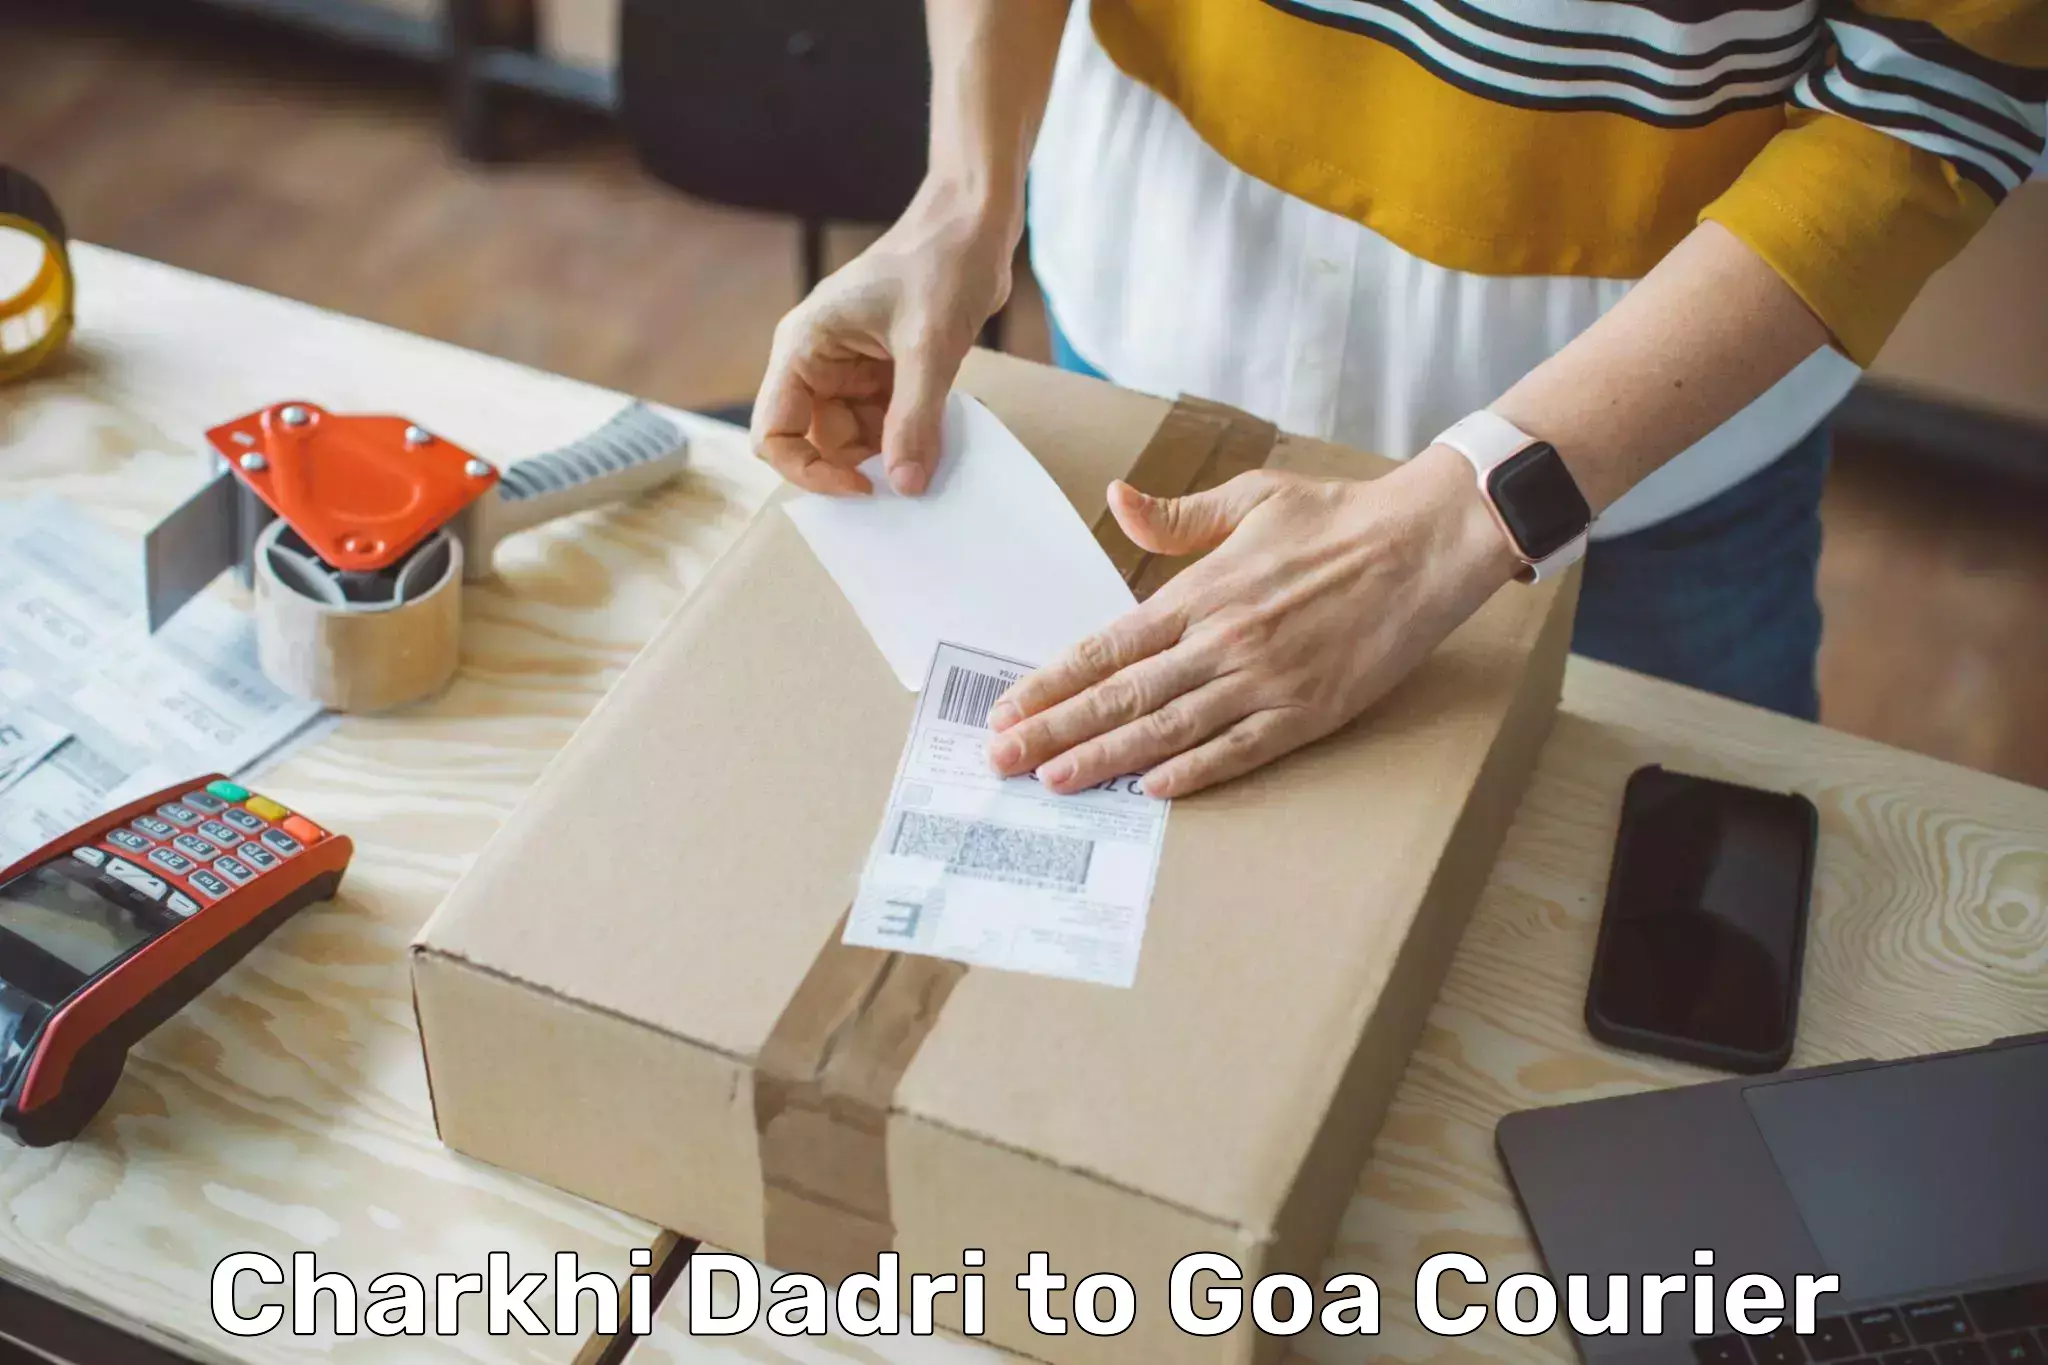 Package delivery network Charkhi Dadri to IIT Goa